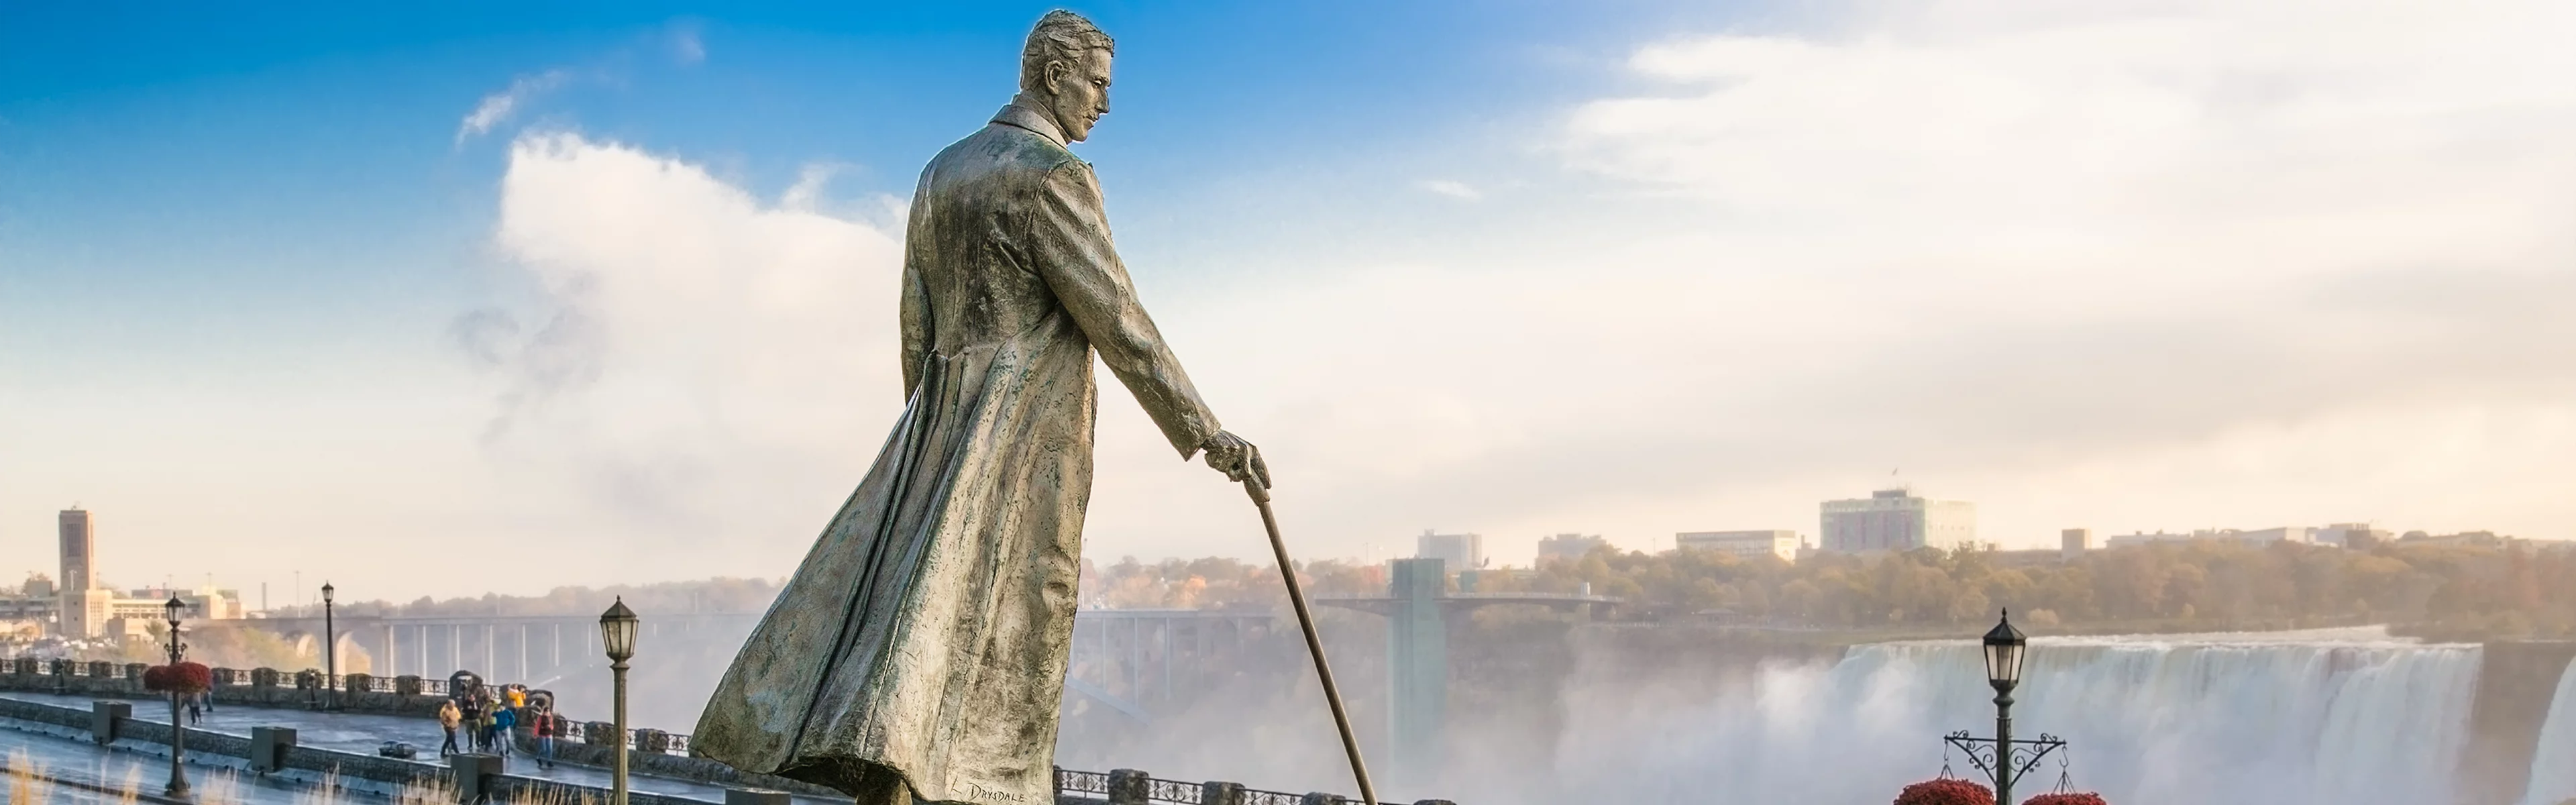 Tesla-Statue vor den Niagara-Fällen (© Shutterstock/Todorovic)